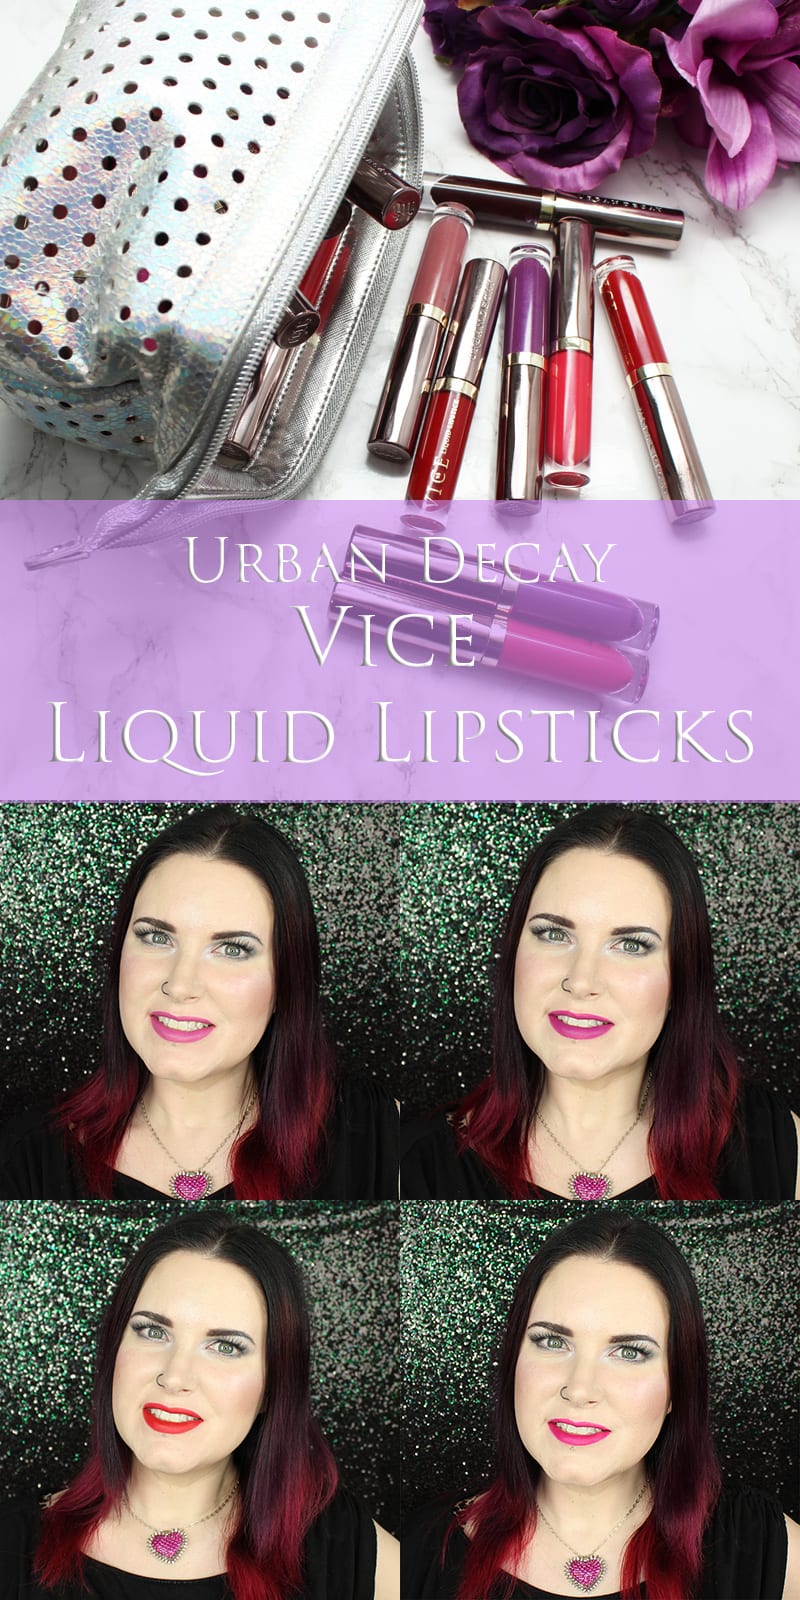 Urban Decay Vice Liquid Lipsticks, swatches on pale skin